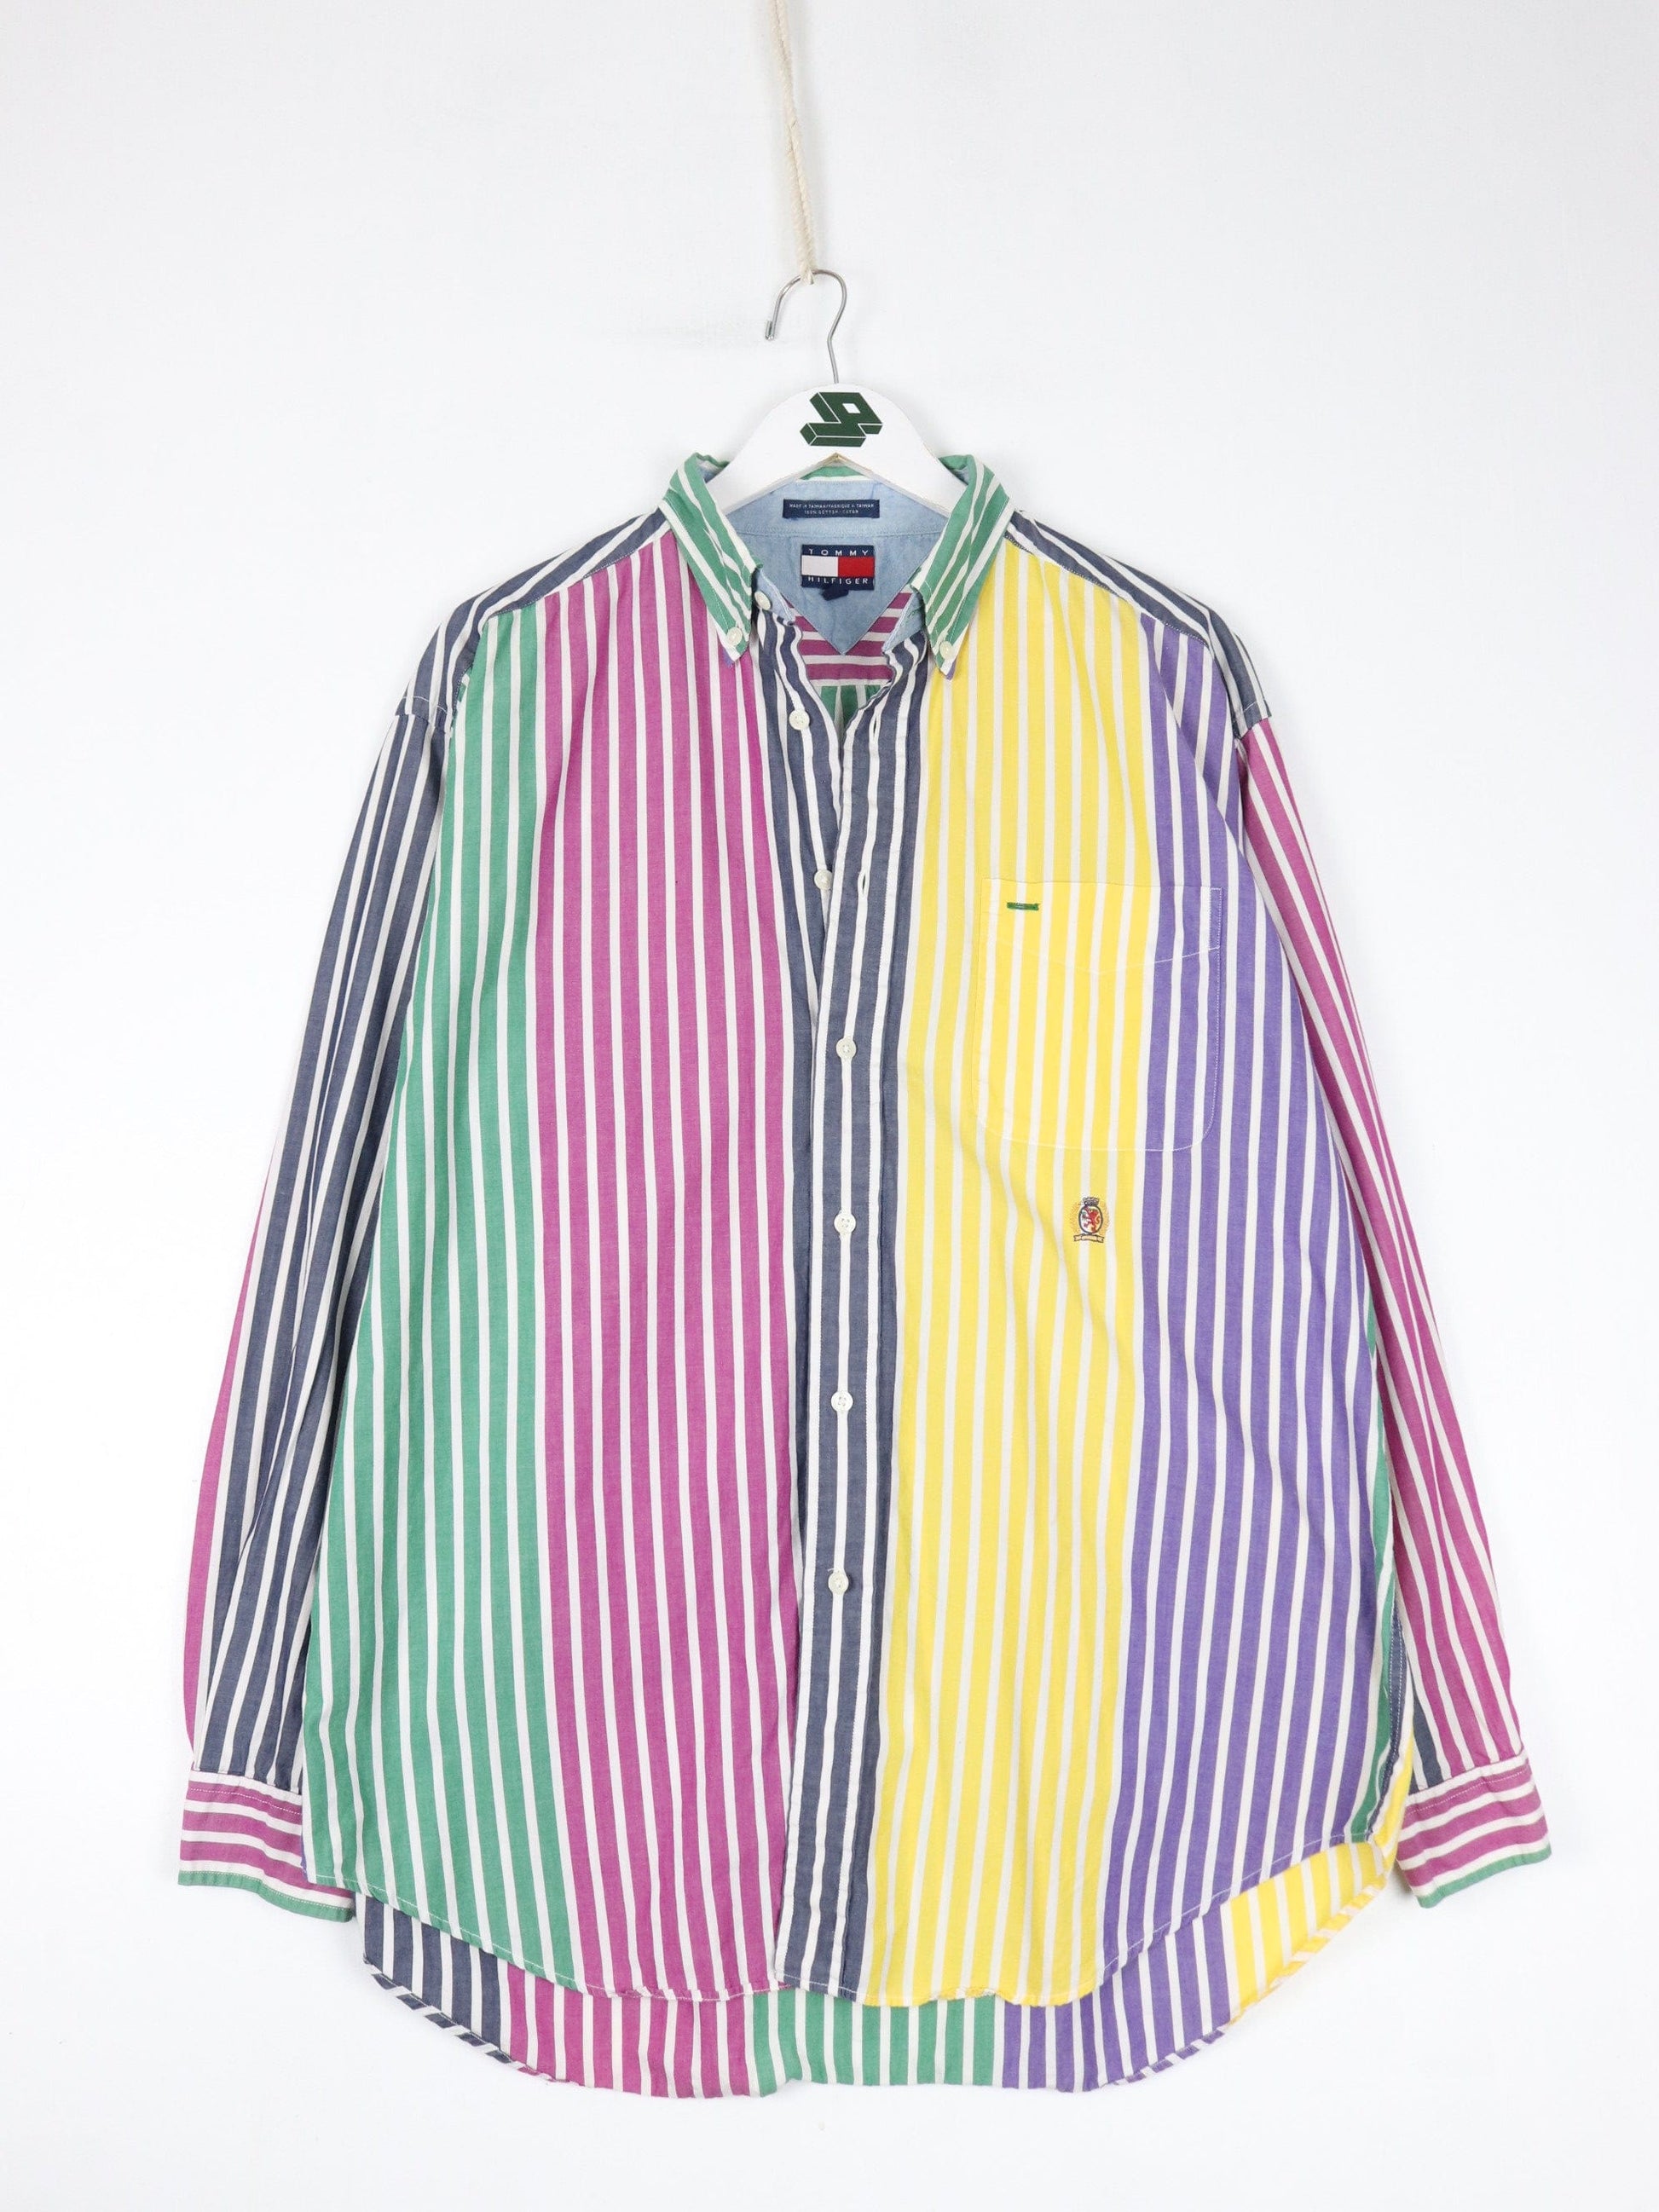 Tommy Hilfiger Button Up Shirts Vintage Tommy Hilfiger Shirt Mens Large Striped Button Up 90s